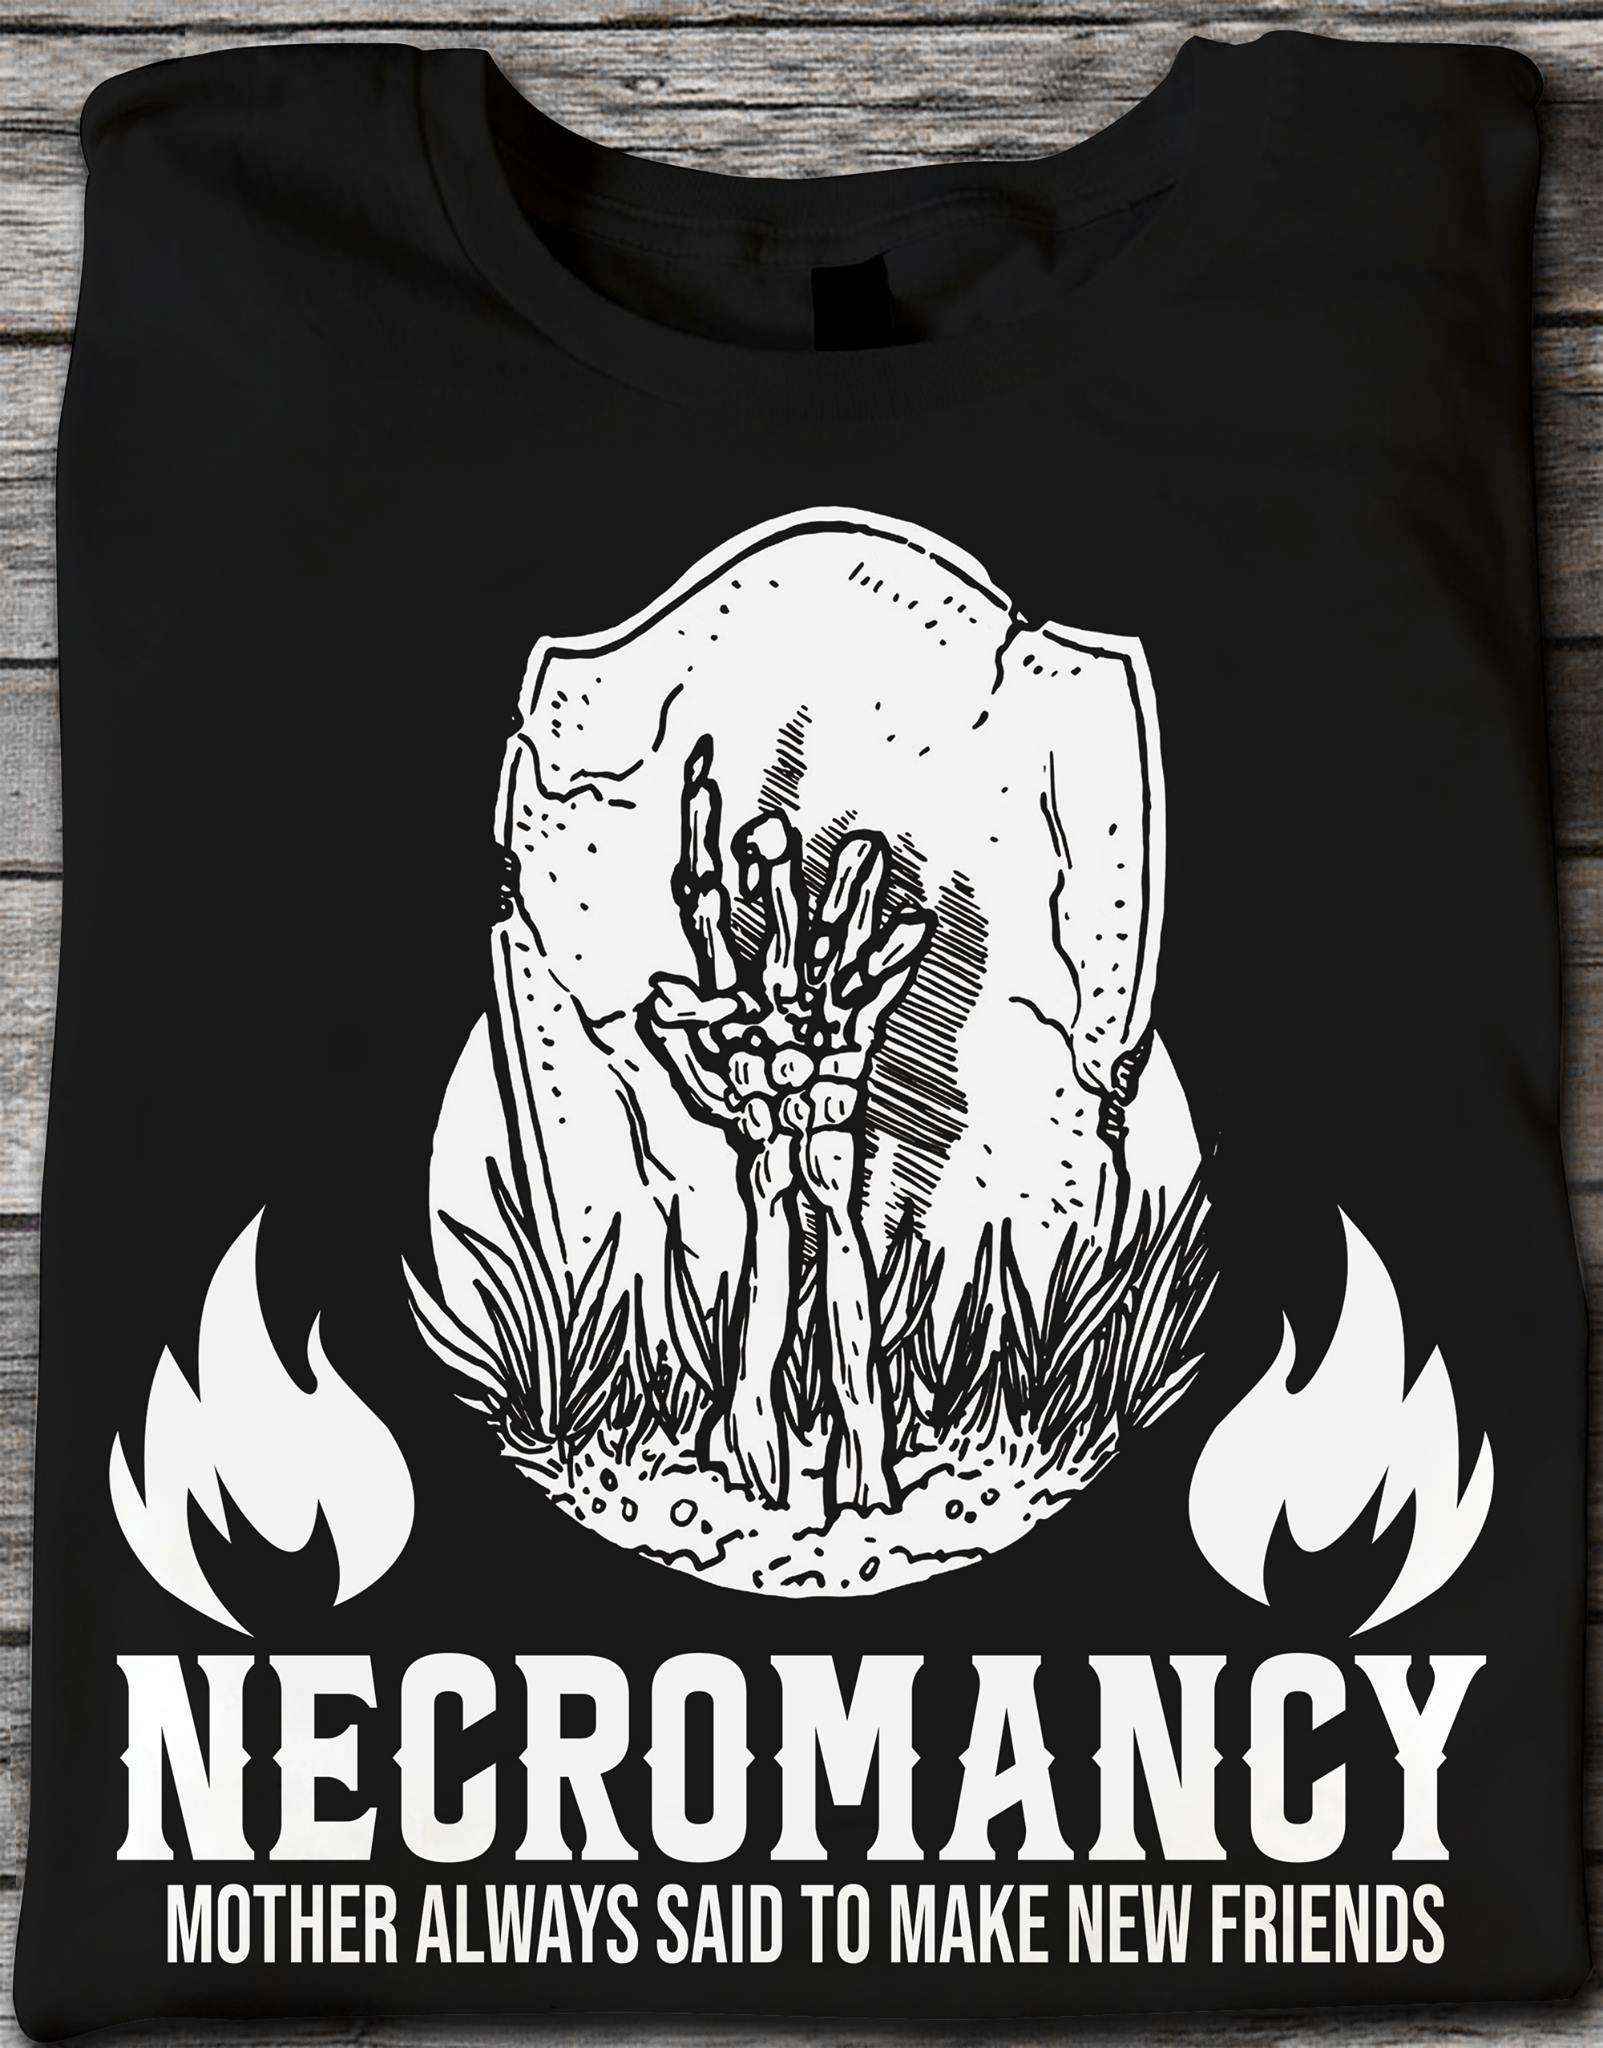 Necromancy mother always said to make new friends - Grave Skeleton Hand